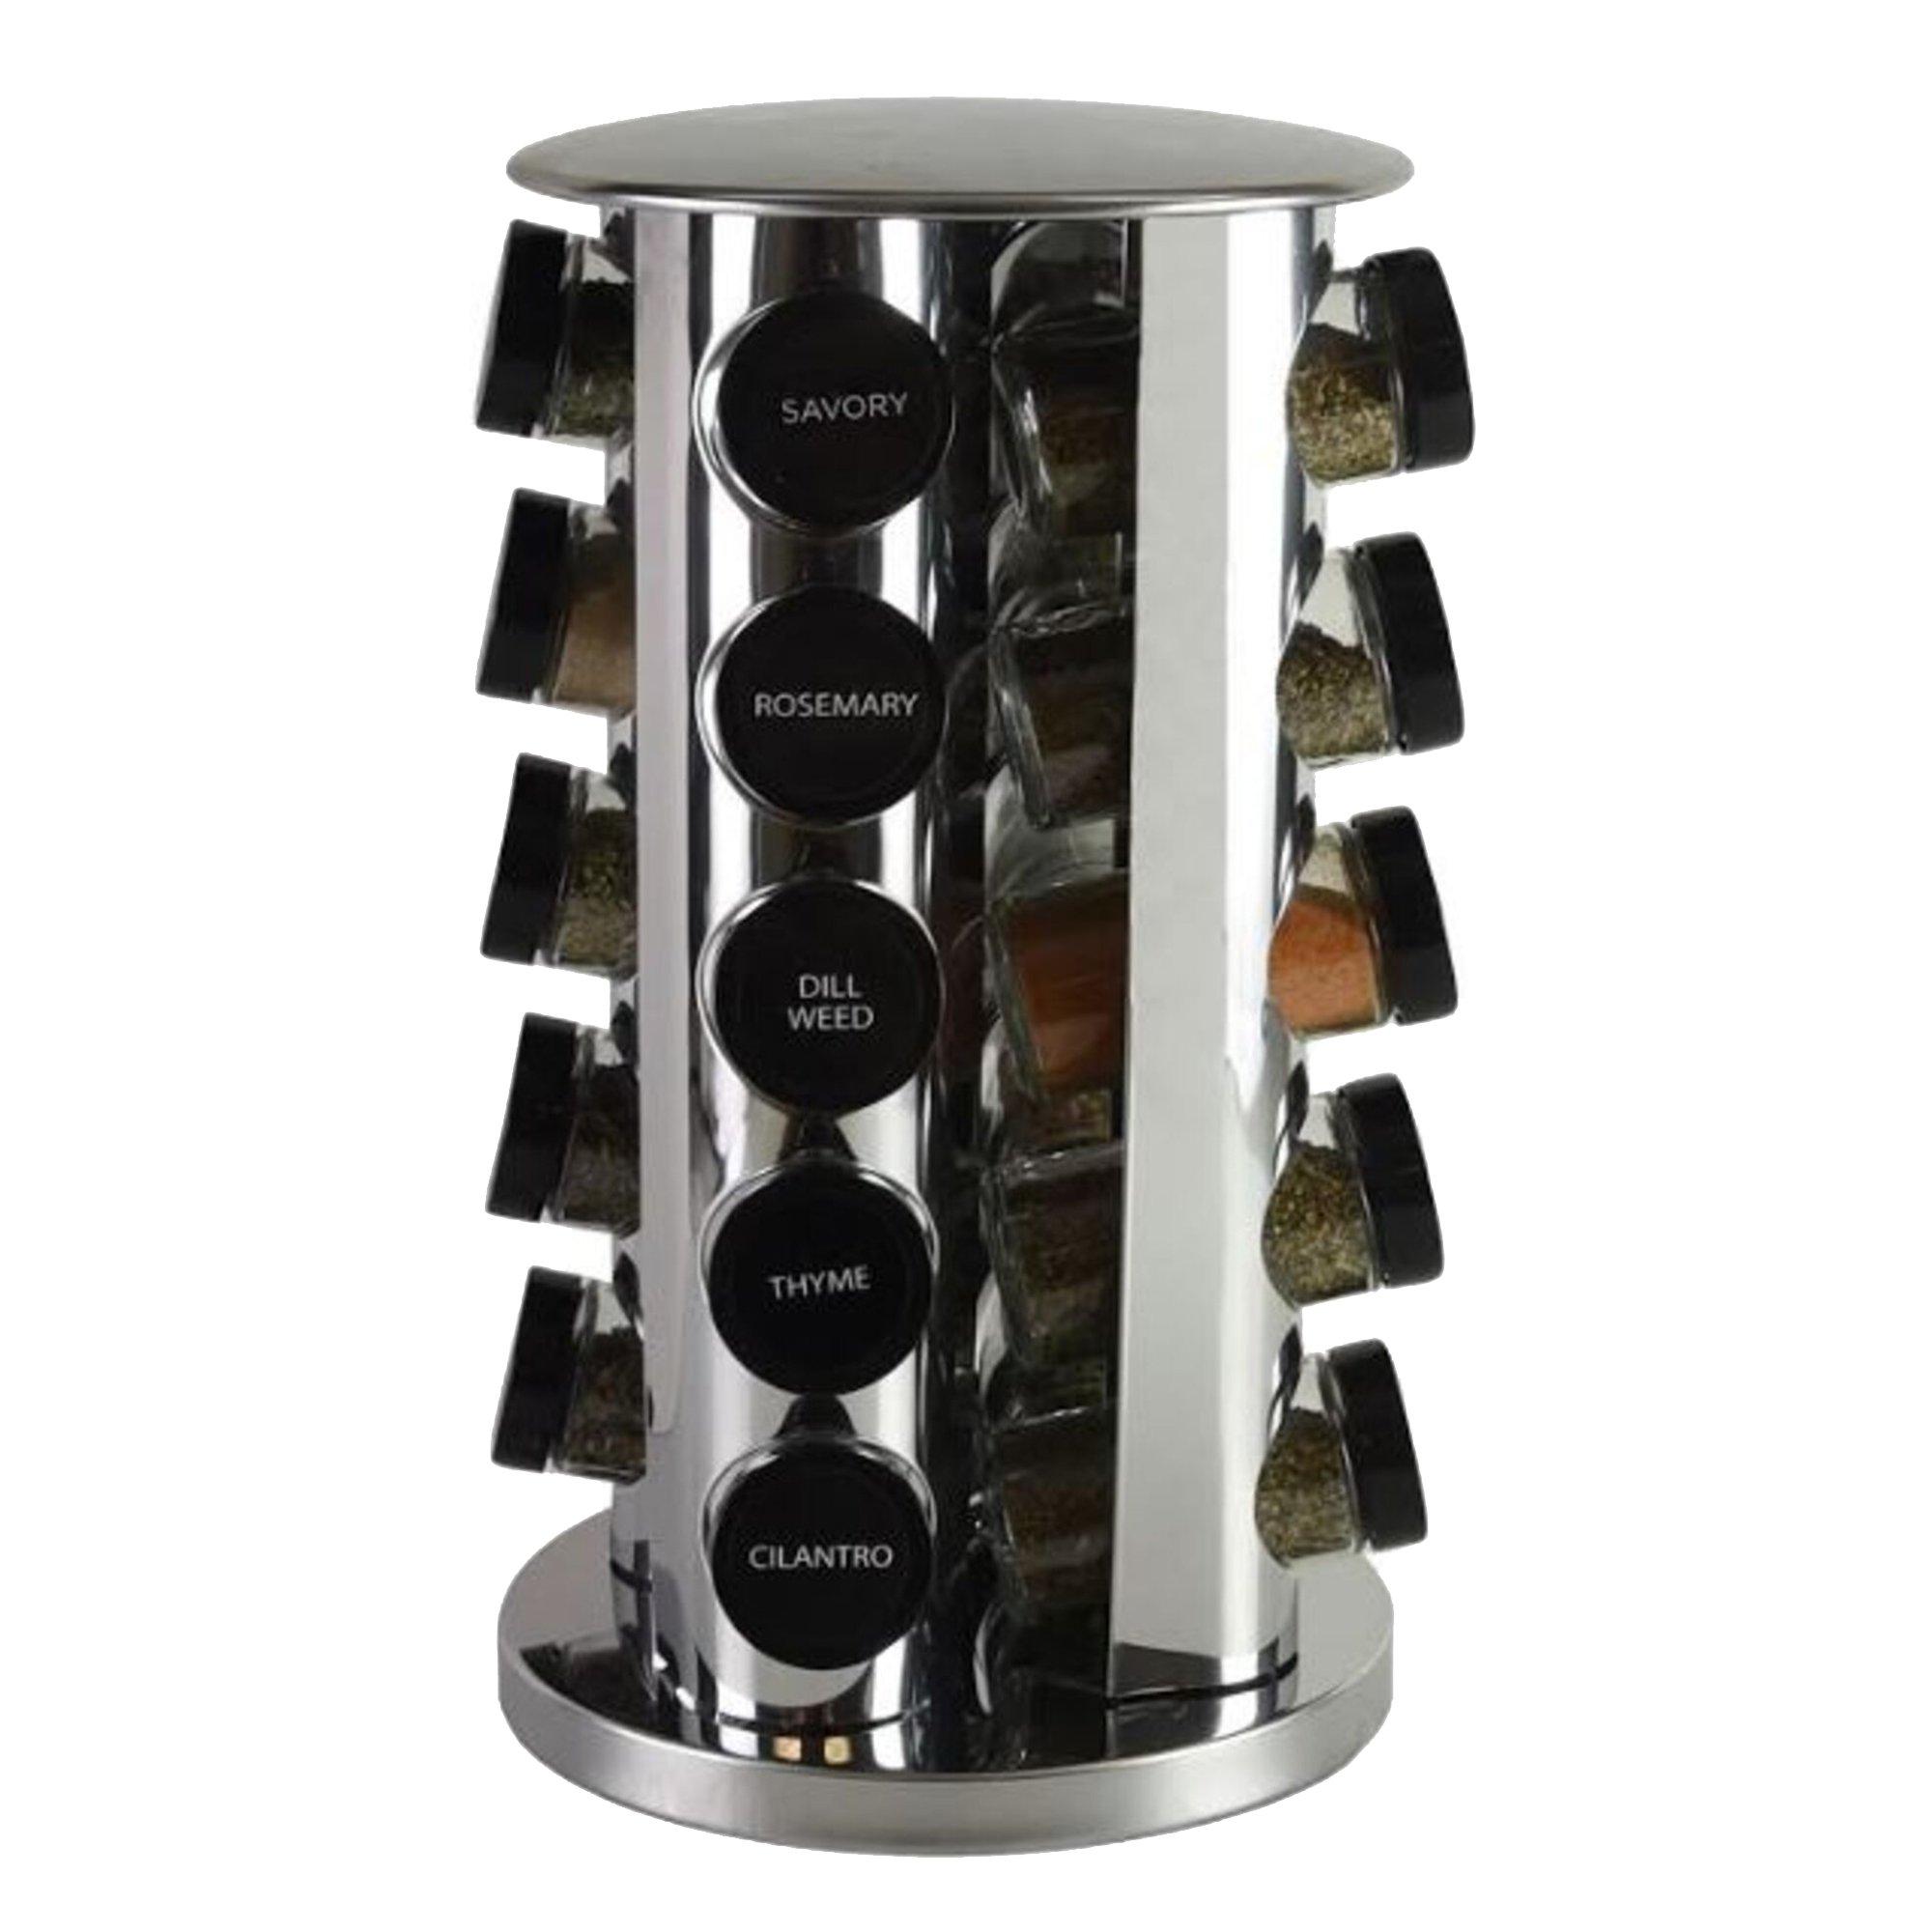 20-Jar Revolving Tower Countertop Spice Rack